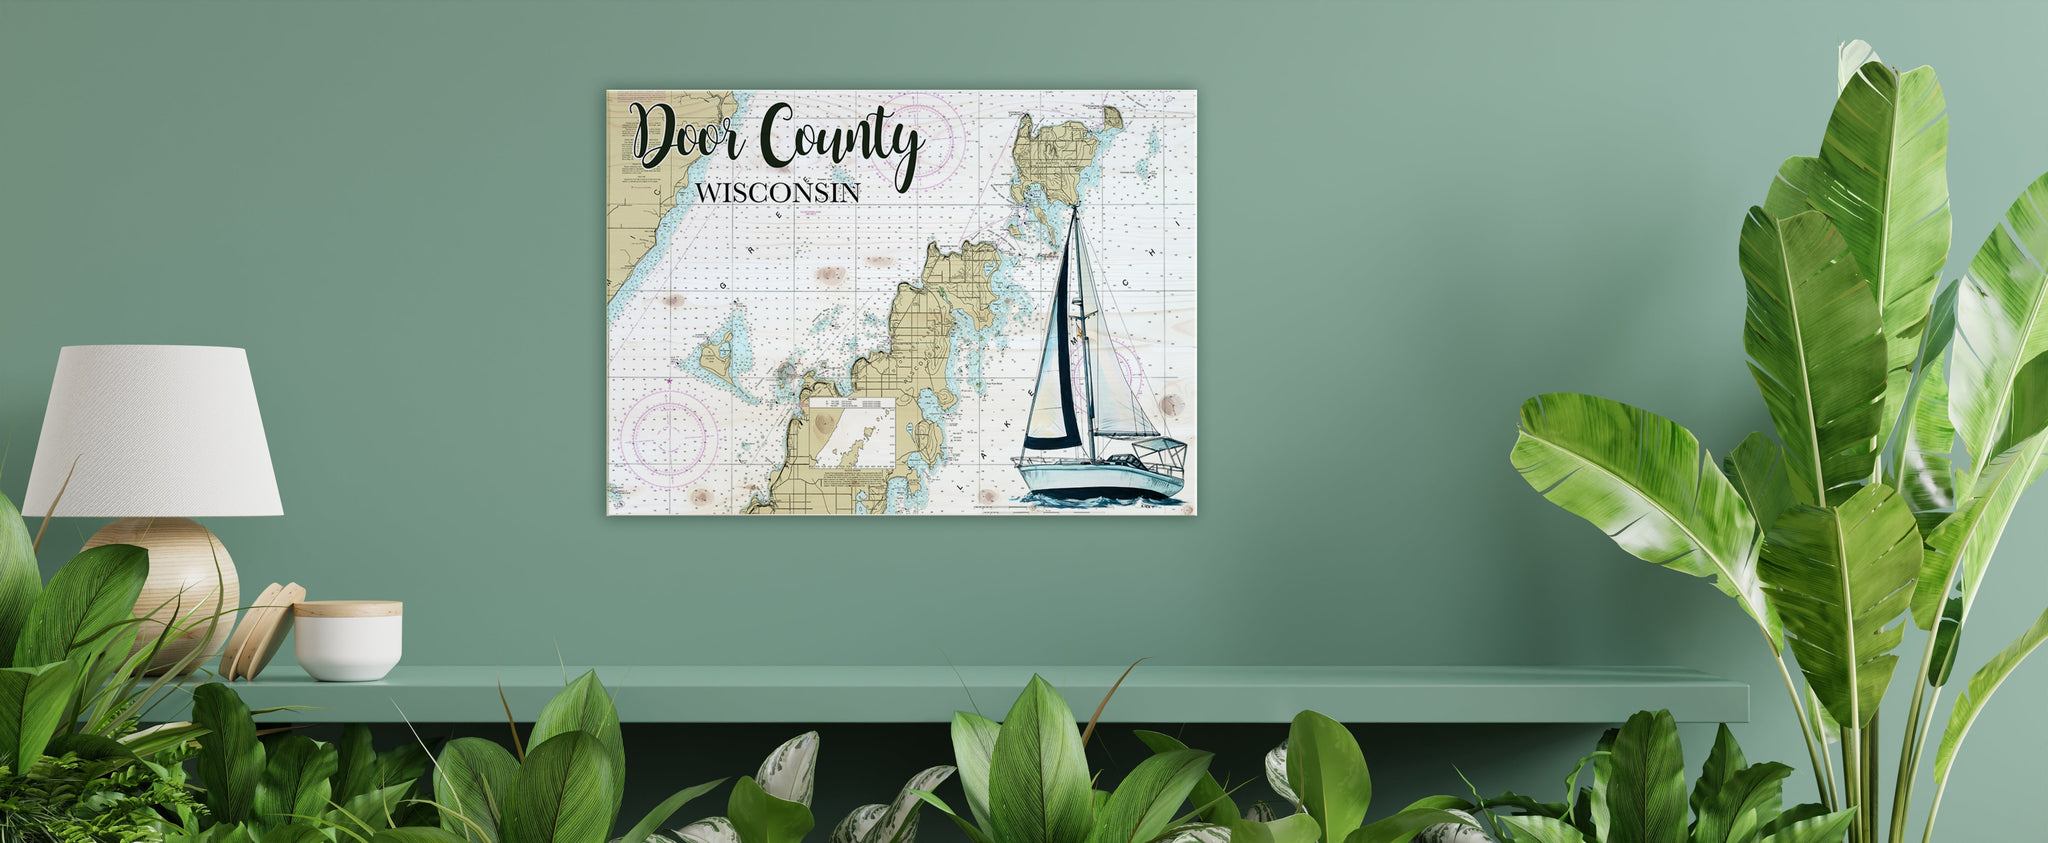 Florida Keys, FL  Pelican, Sailfish, Manatee Plank Map